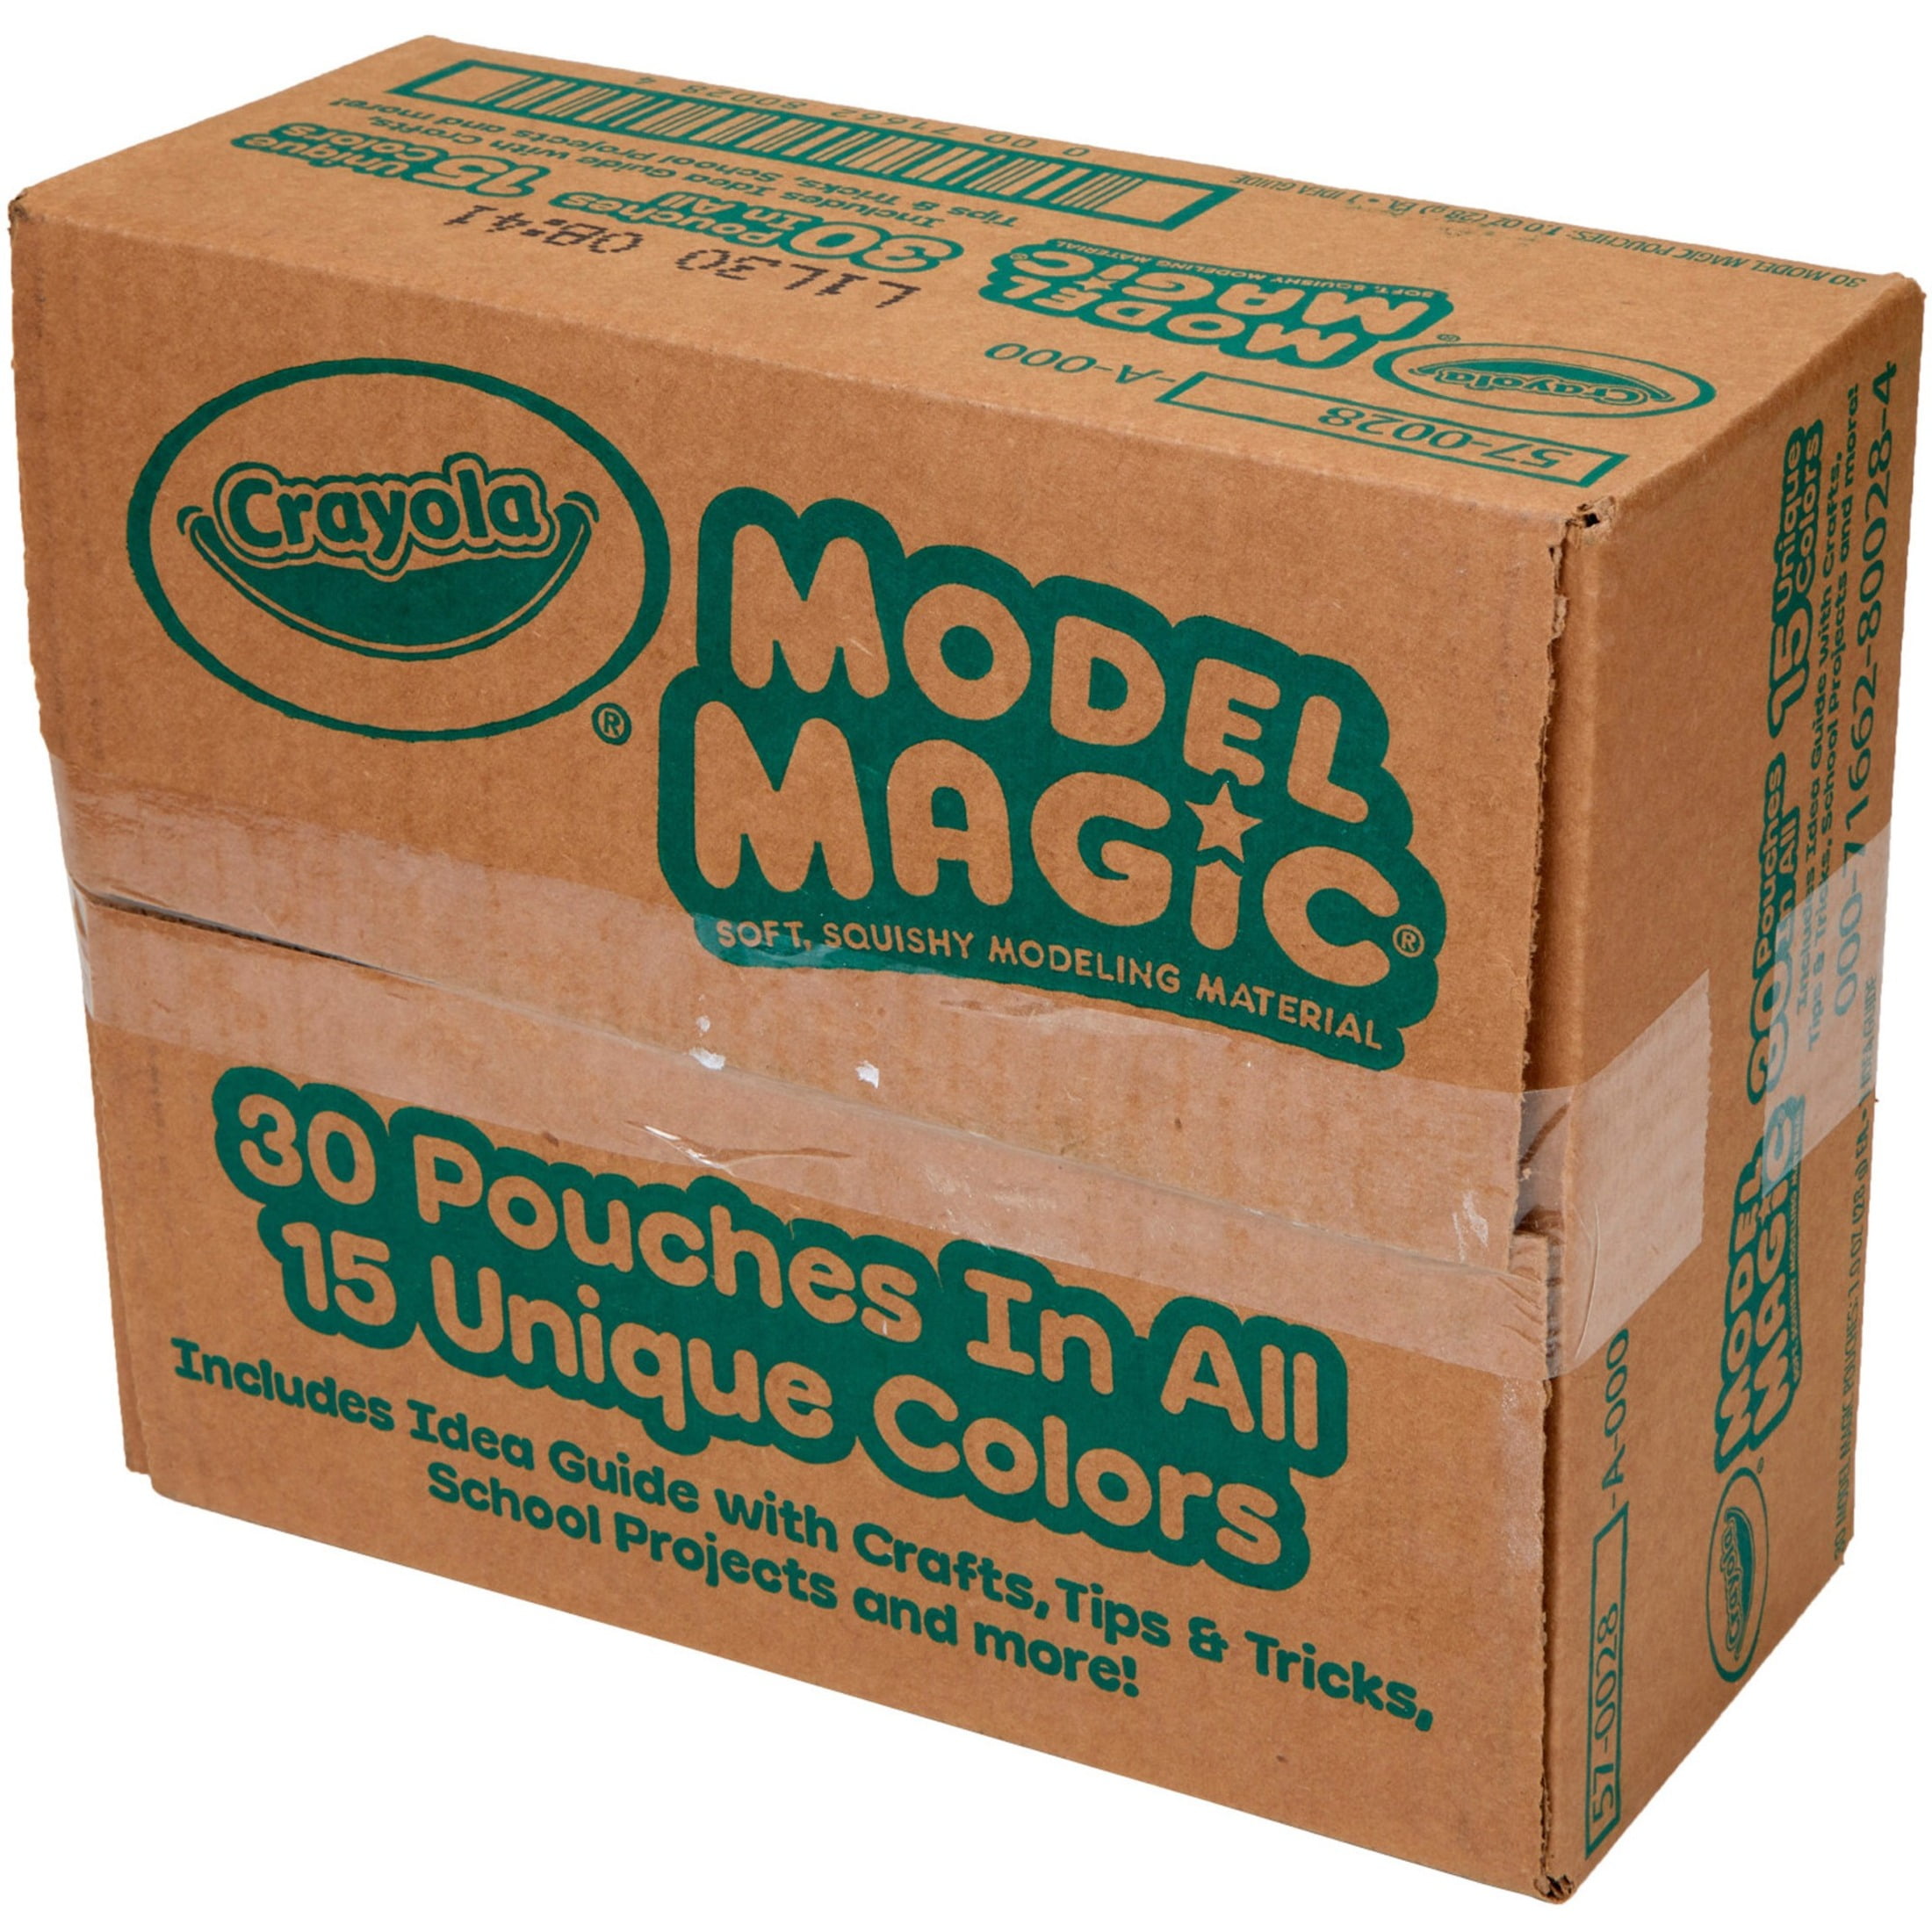 Crayola Model Magic White 4 oz. Each [Pack of 4 ]